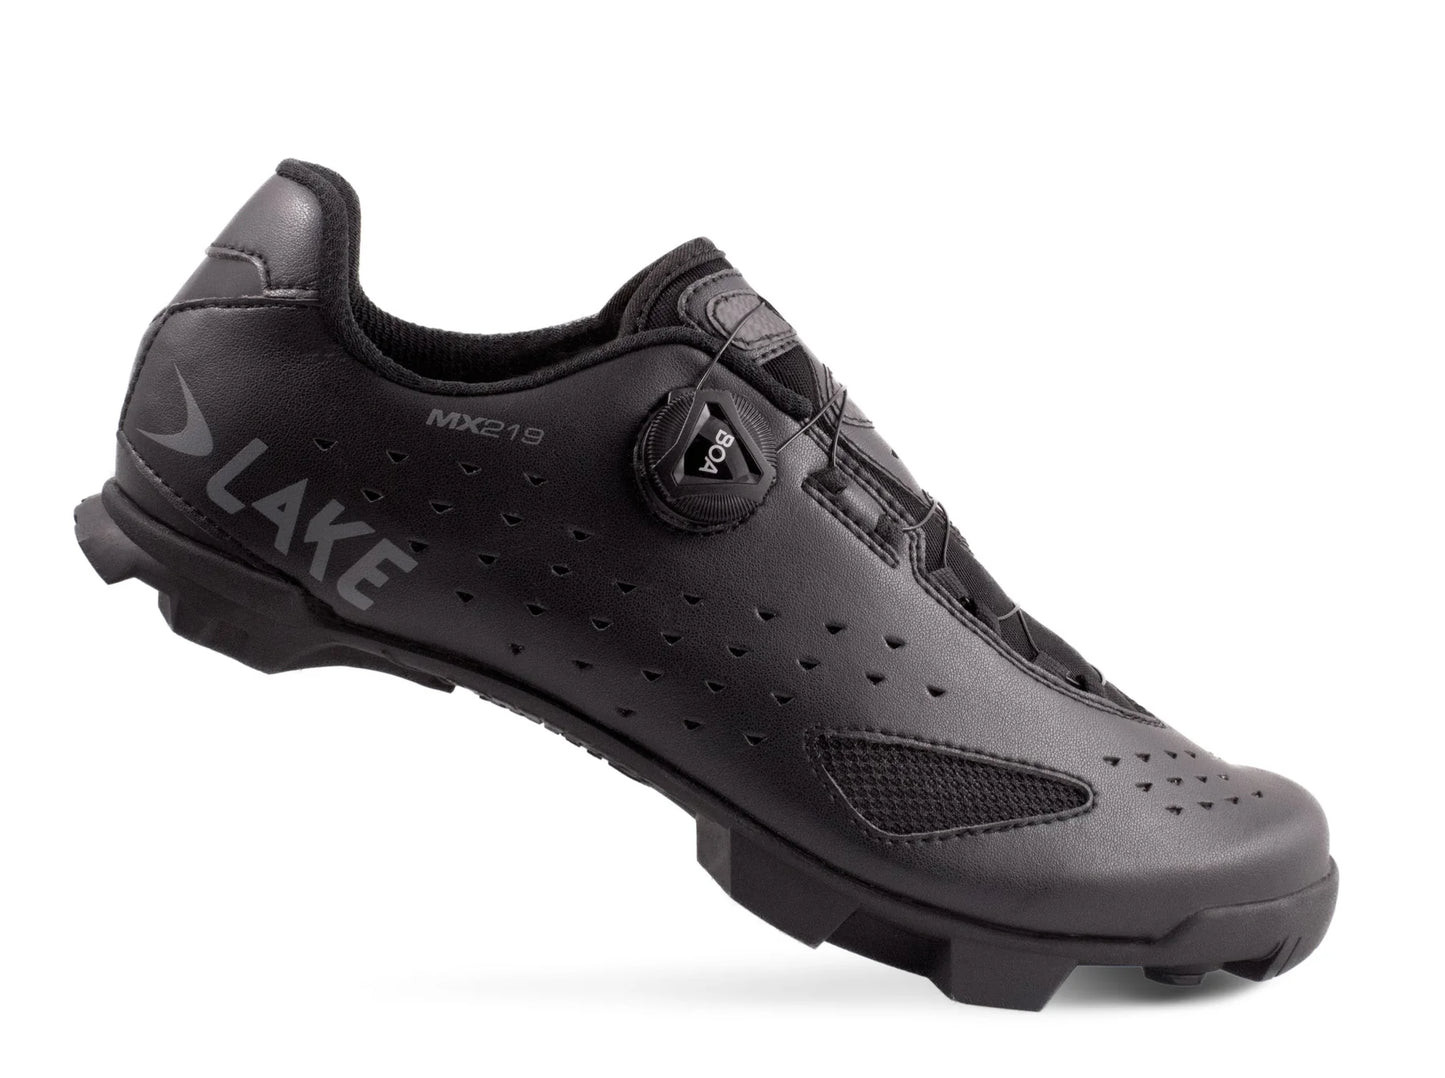 Lake MX219 MTB Cycling Shoes